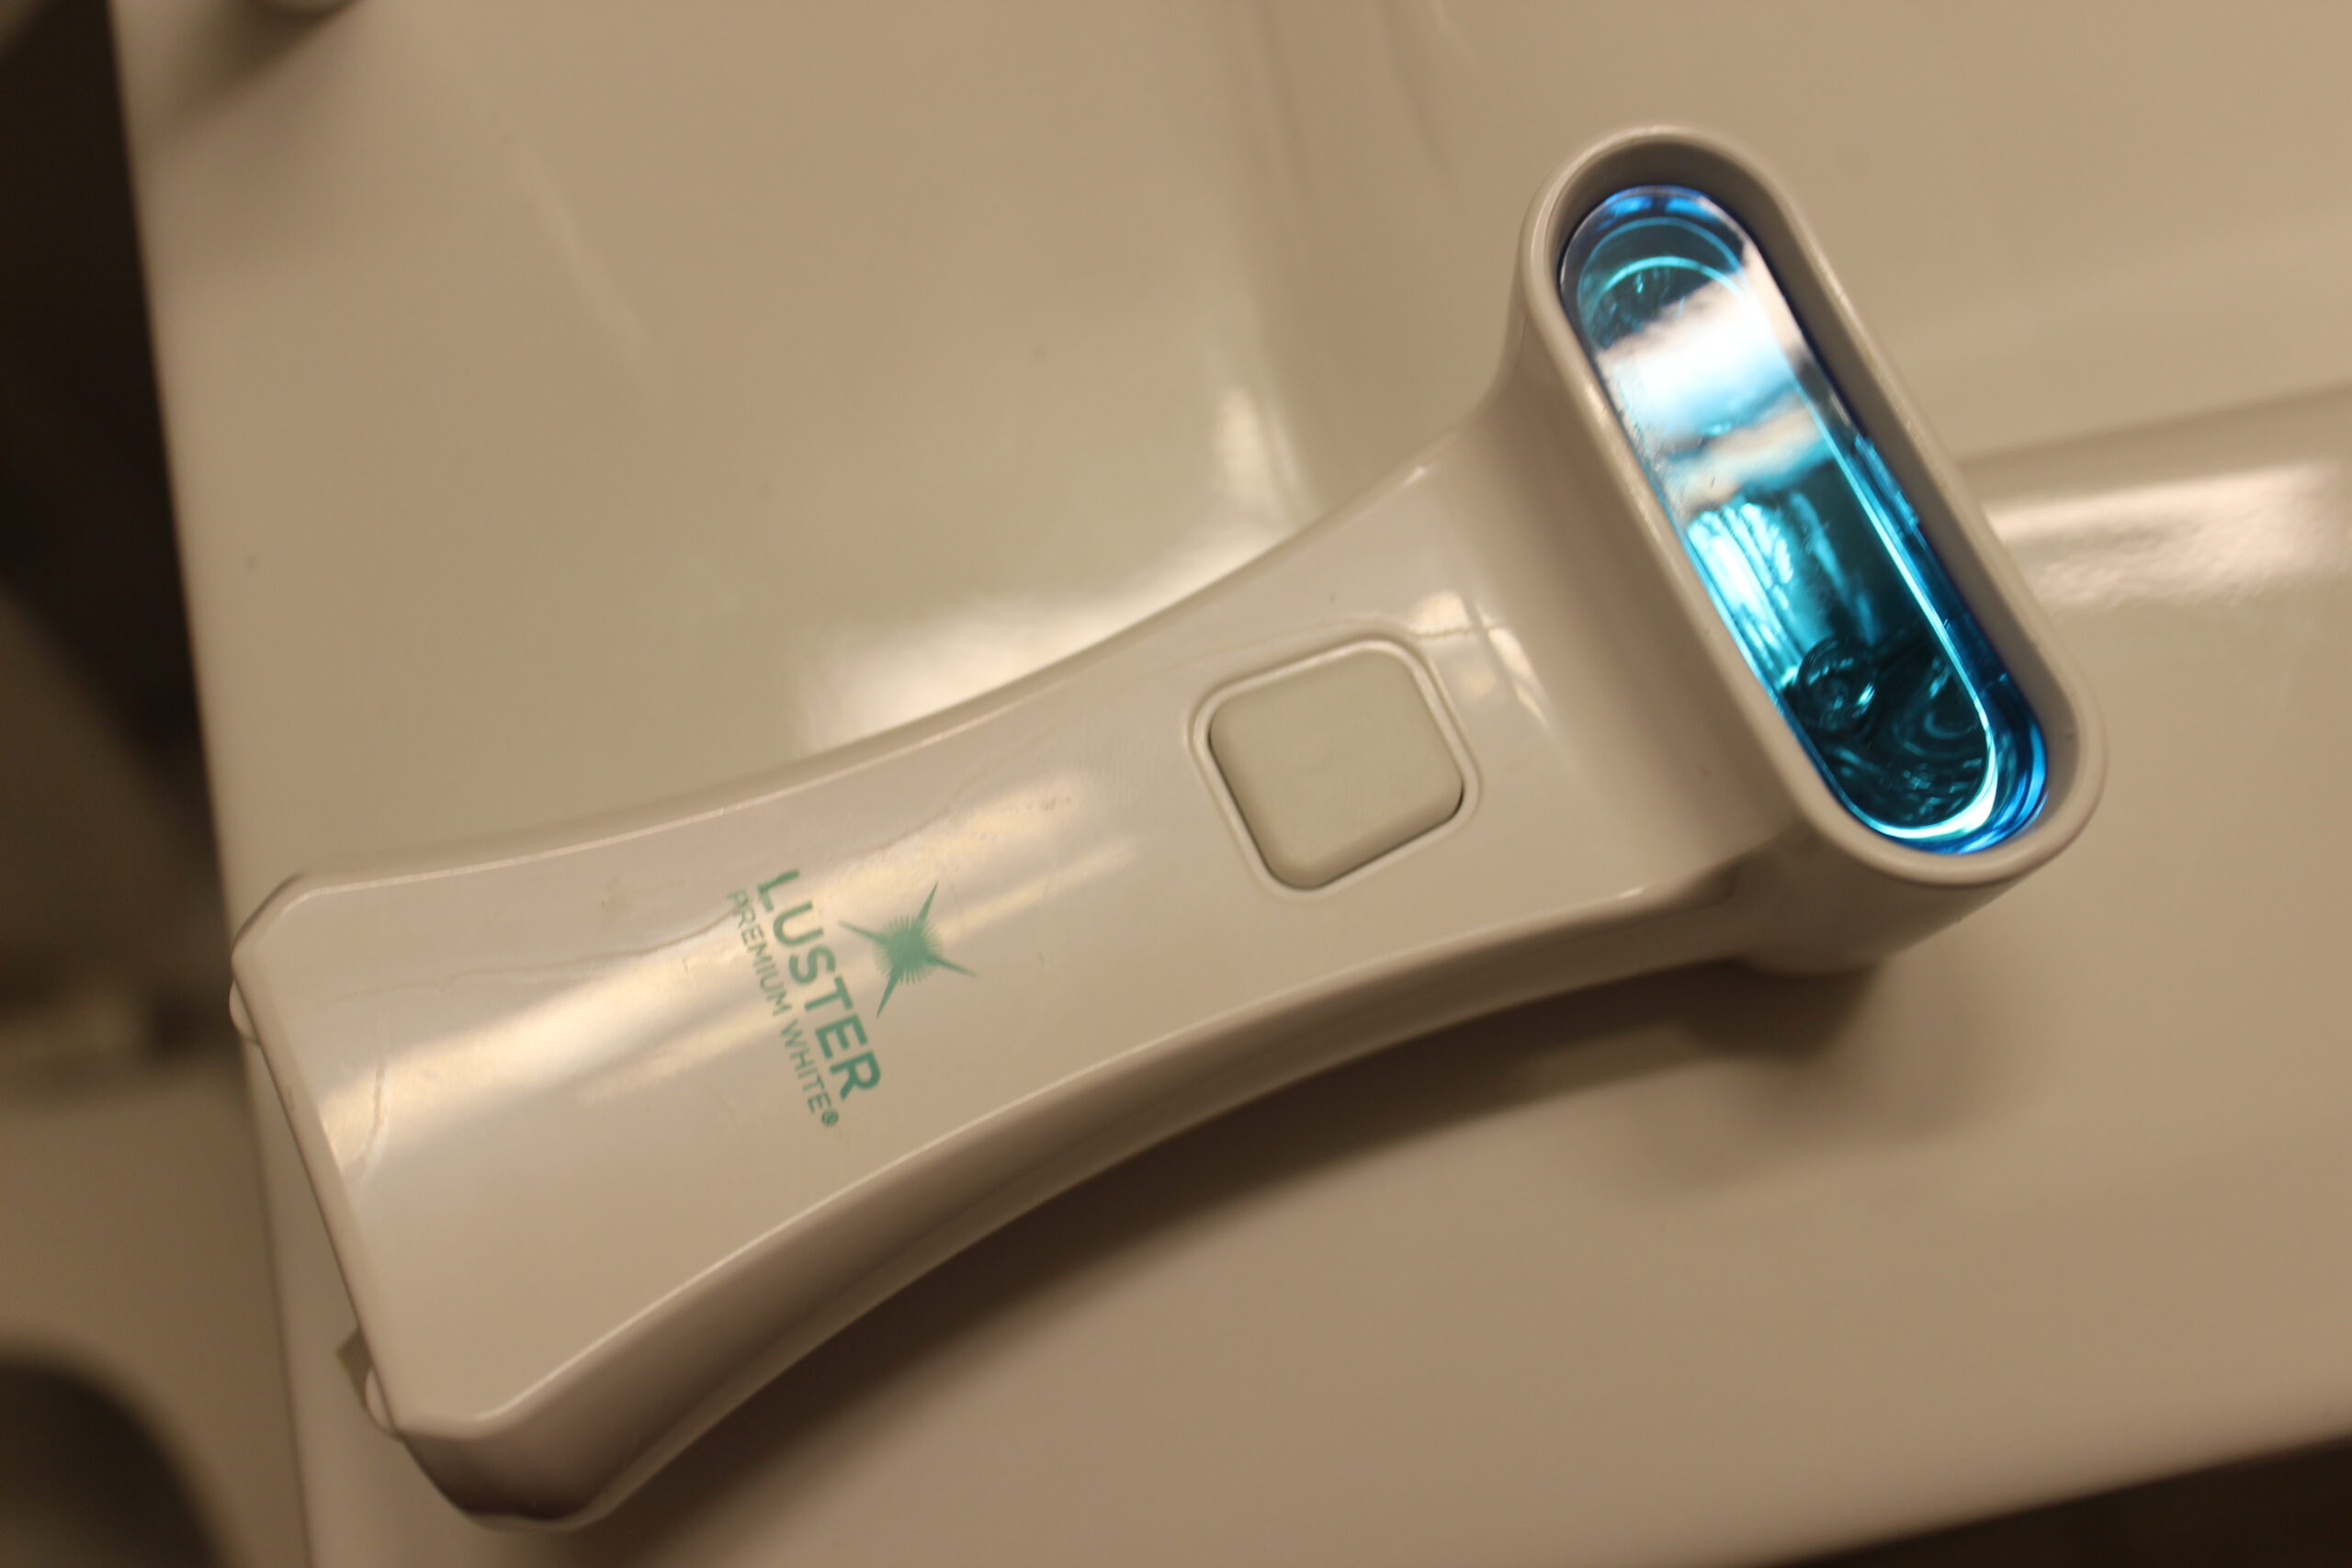 Luster Premium White’s Pearl Infused Pro Light Dental Whitening System